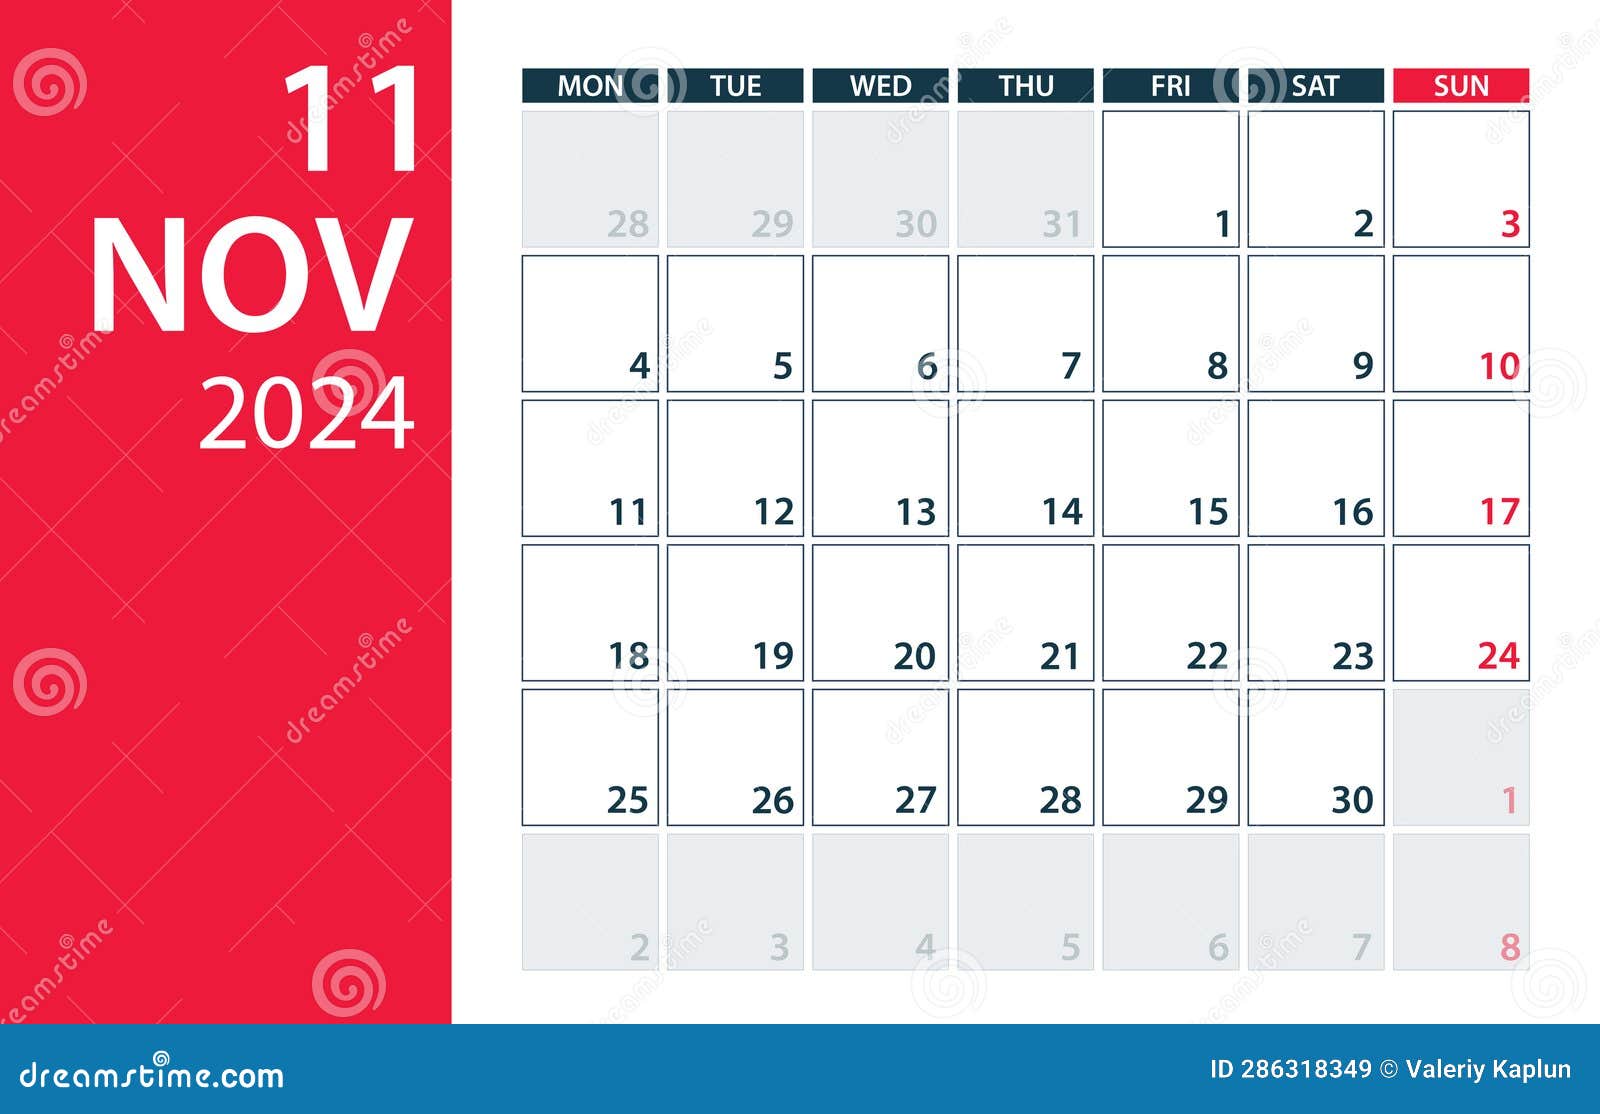 november-2024-calendar-planner-vector-illustration-template-mock-up